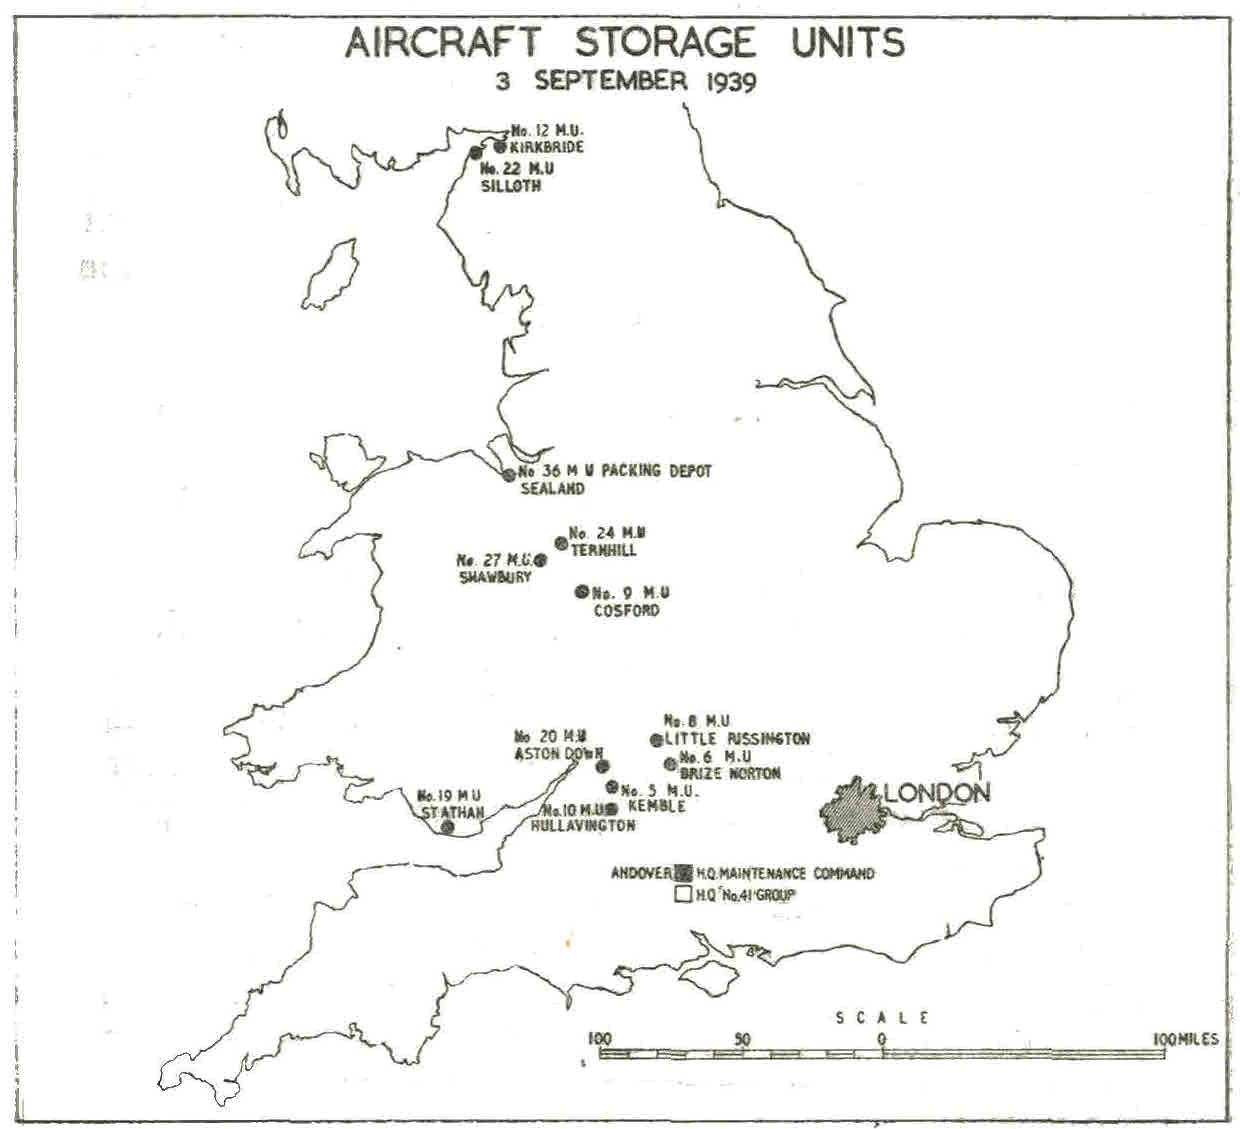 Aircraft Storage Units - September 1939